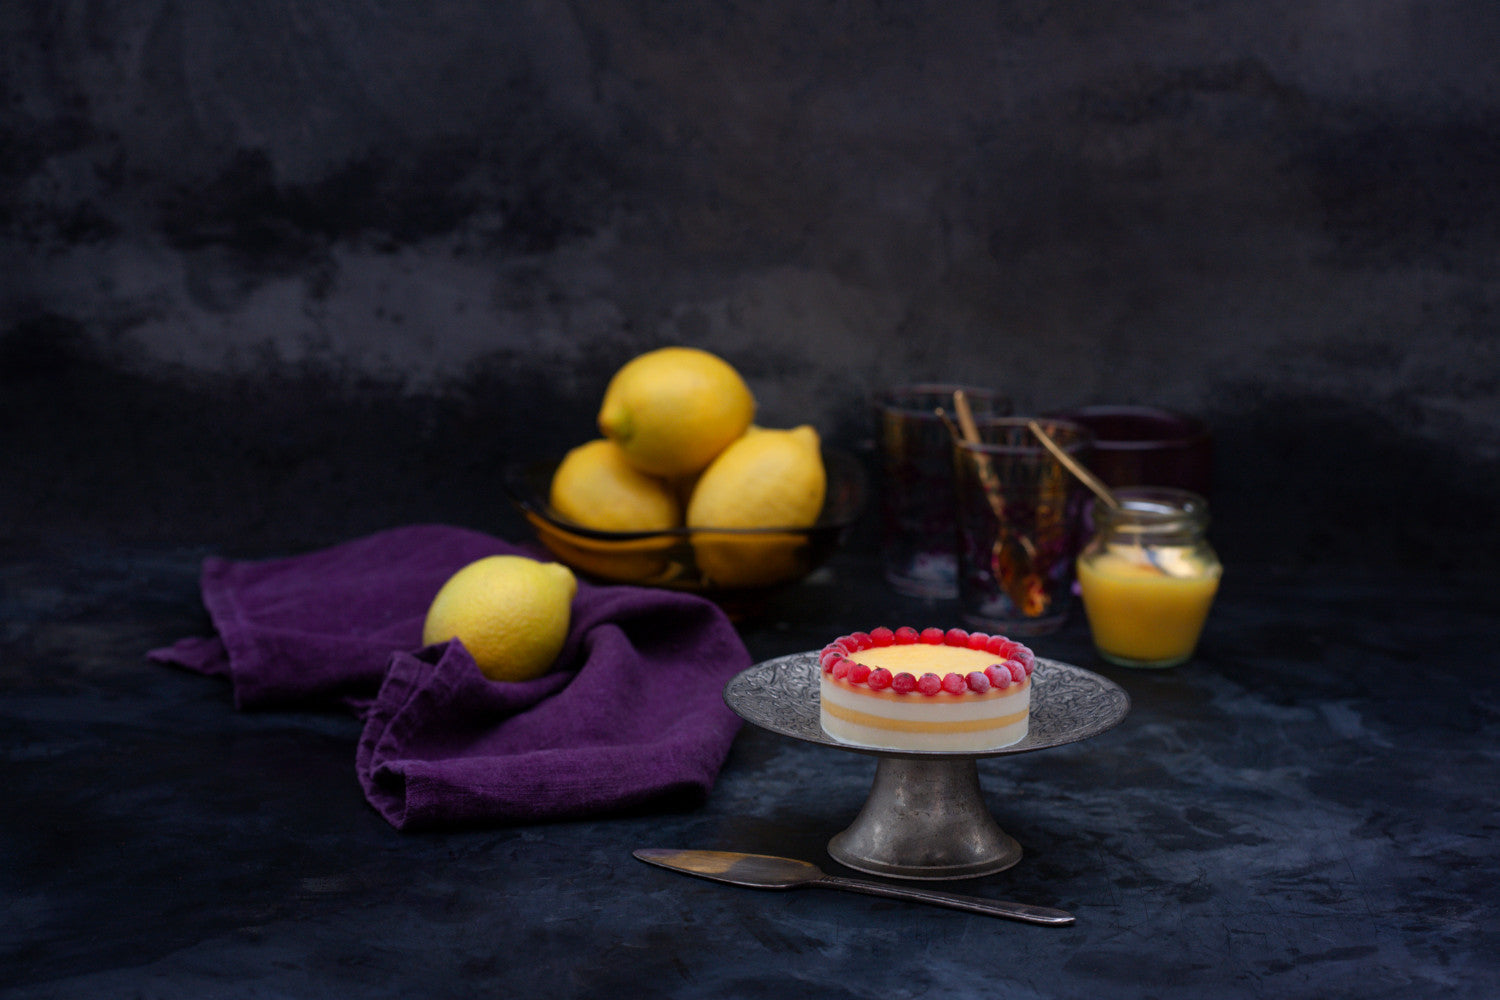 Ice cream lemon tart decorated with redcurrants